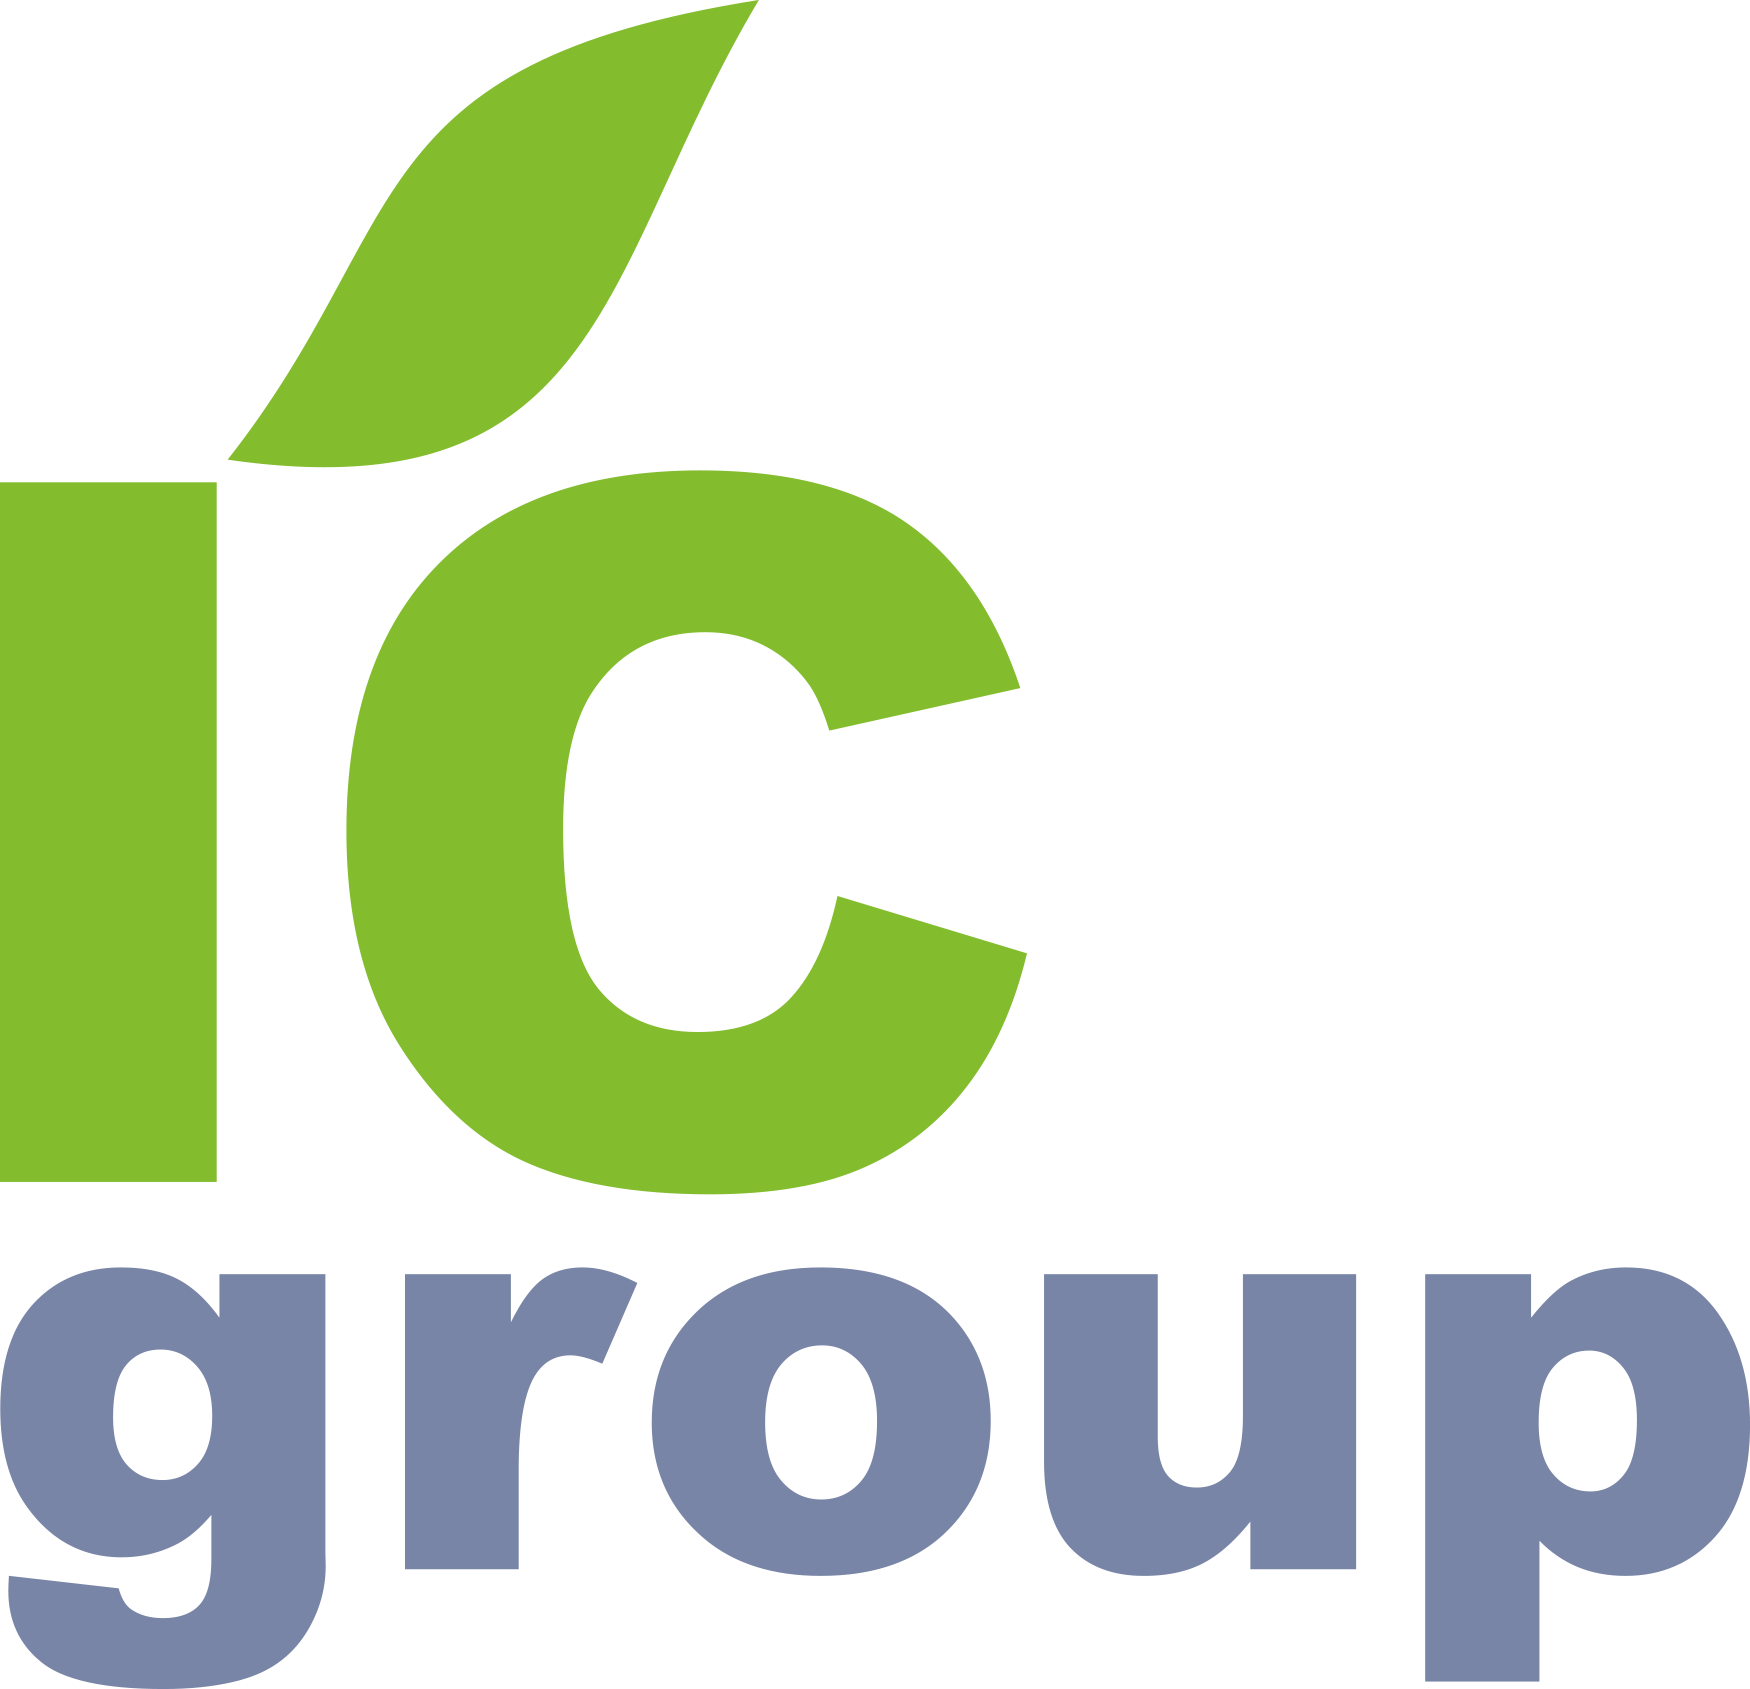 Ic group. Ic Group logo. Ecookna Group лого. Service Group.